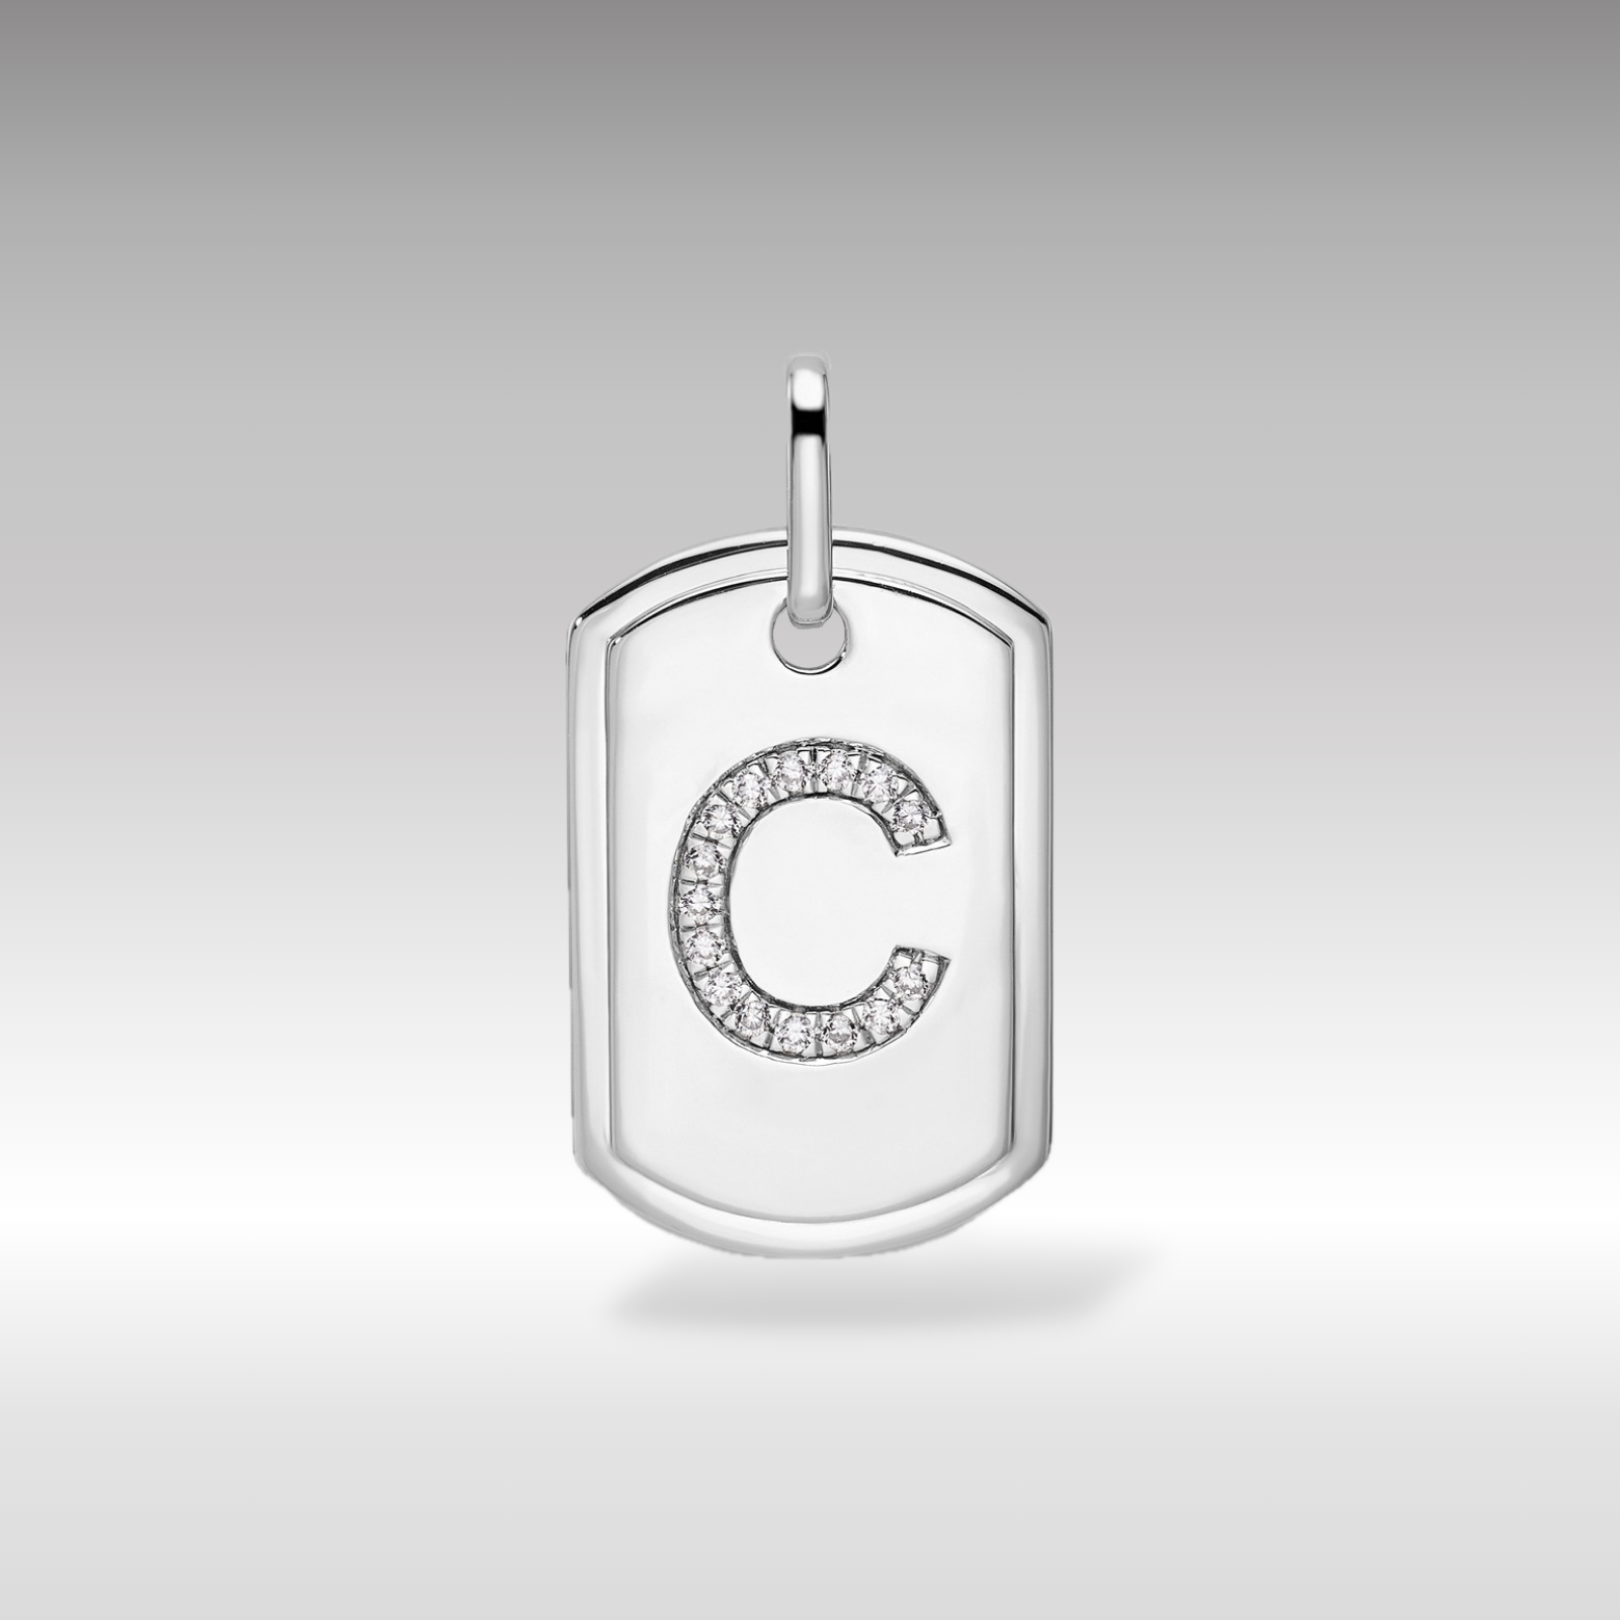 14K White Gold Initial "C" Dog Tag With Genuine Diamonds - Charlie & Co. Jewelry